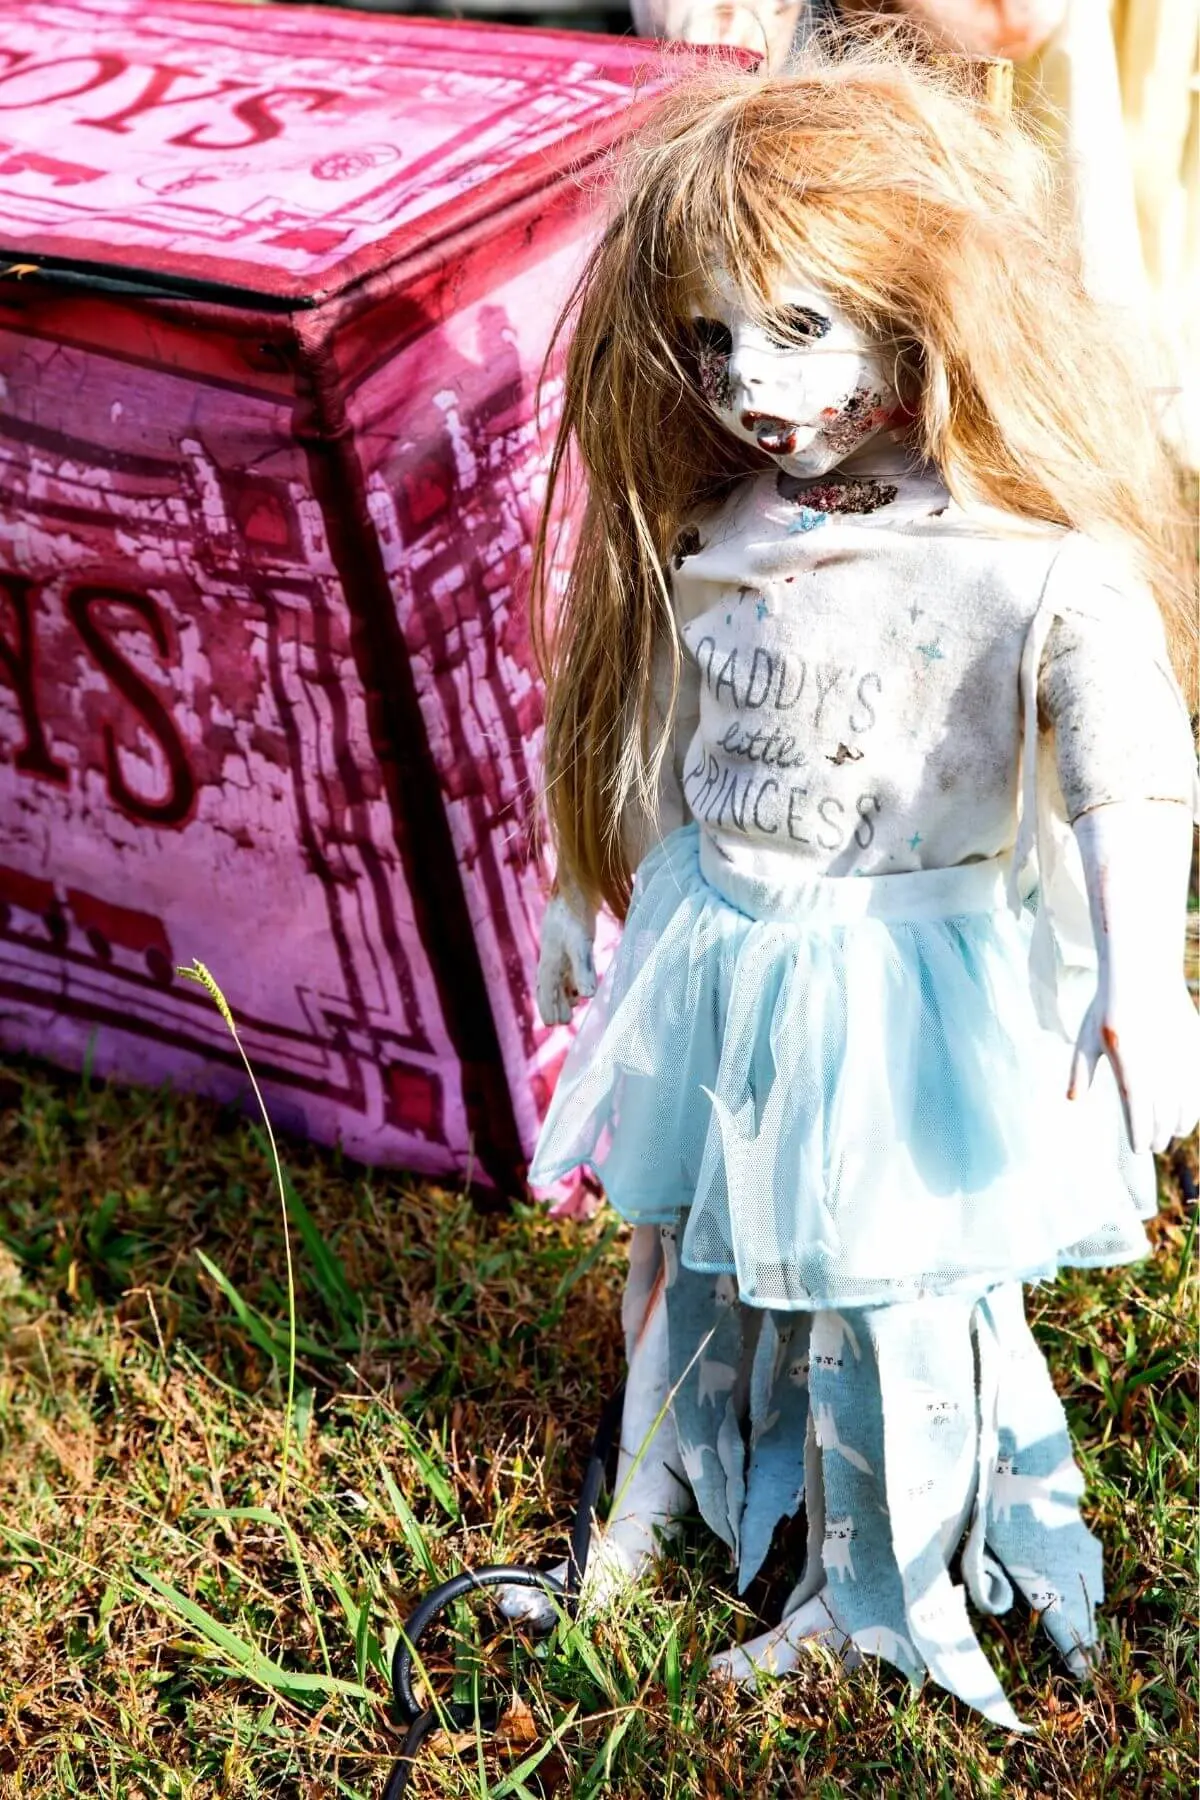 Horror dolls